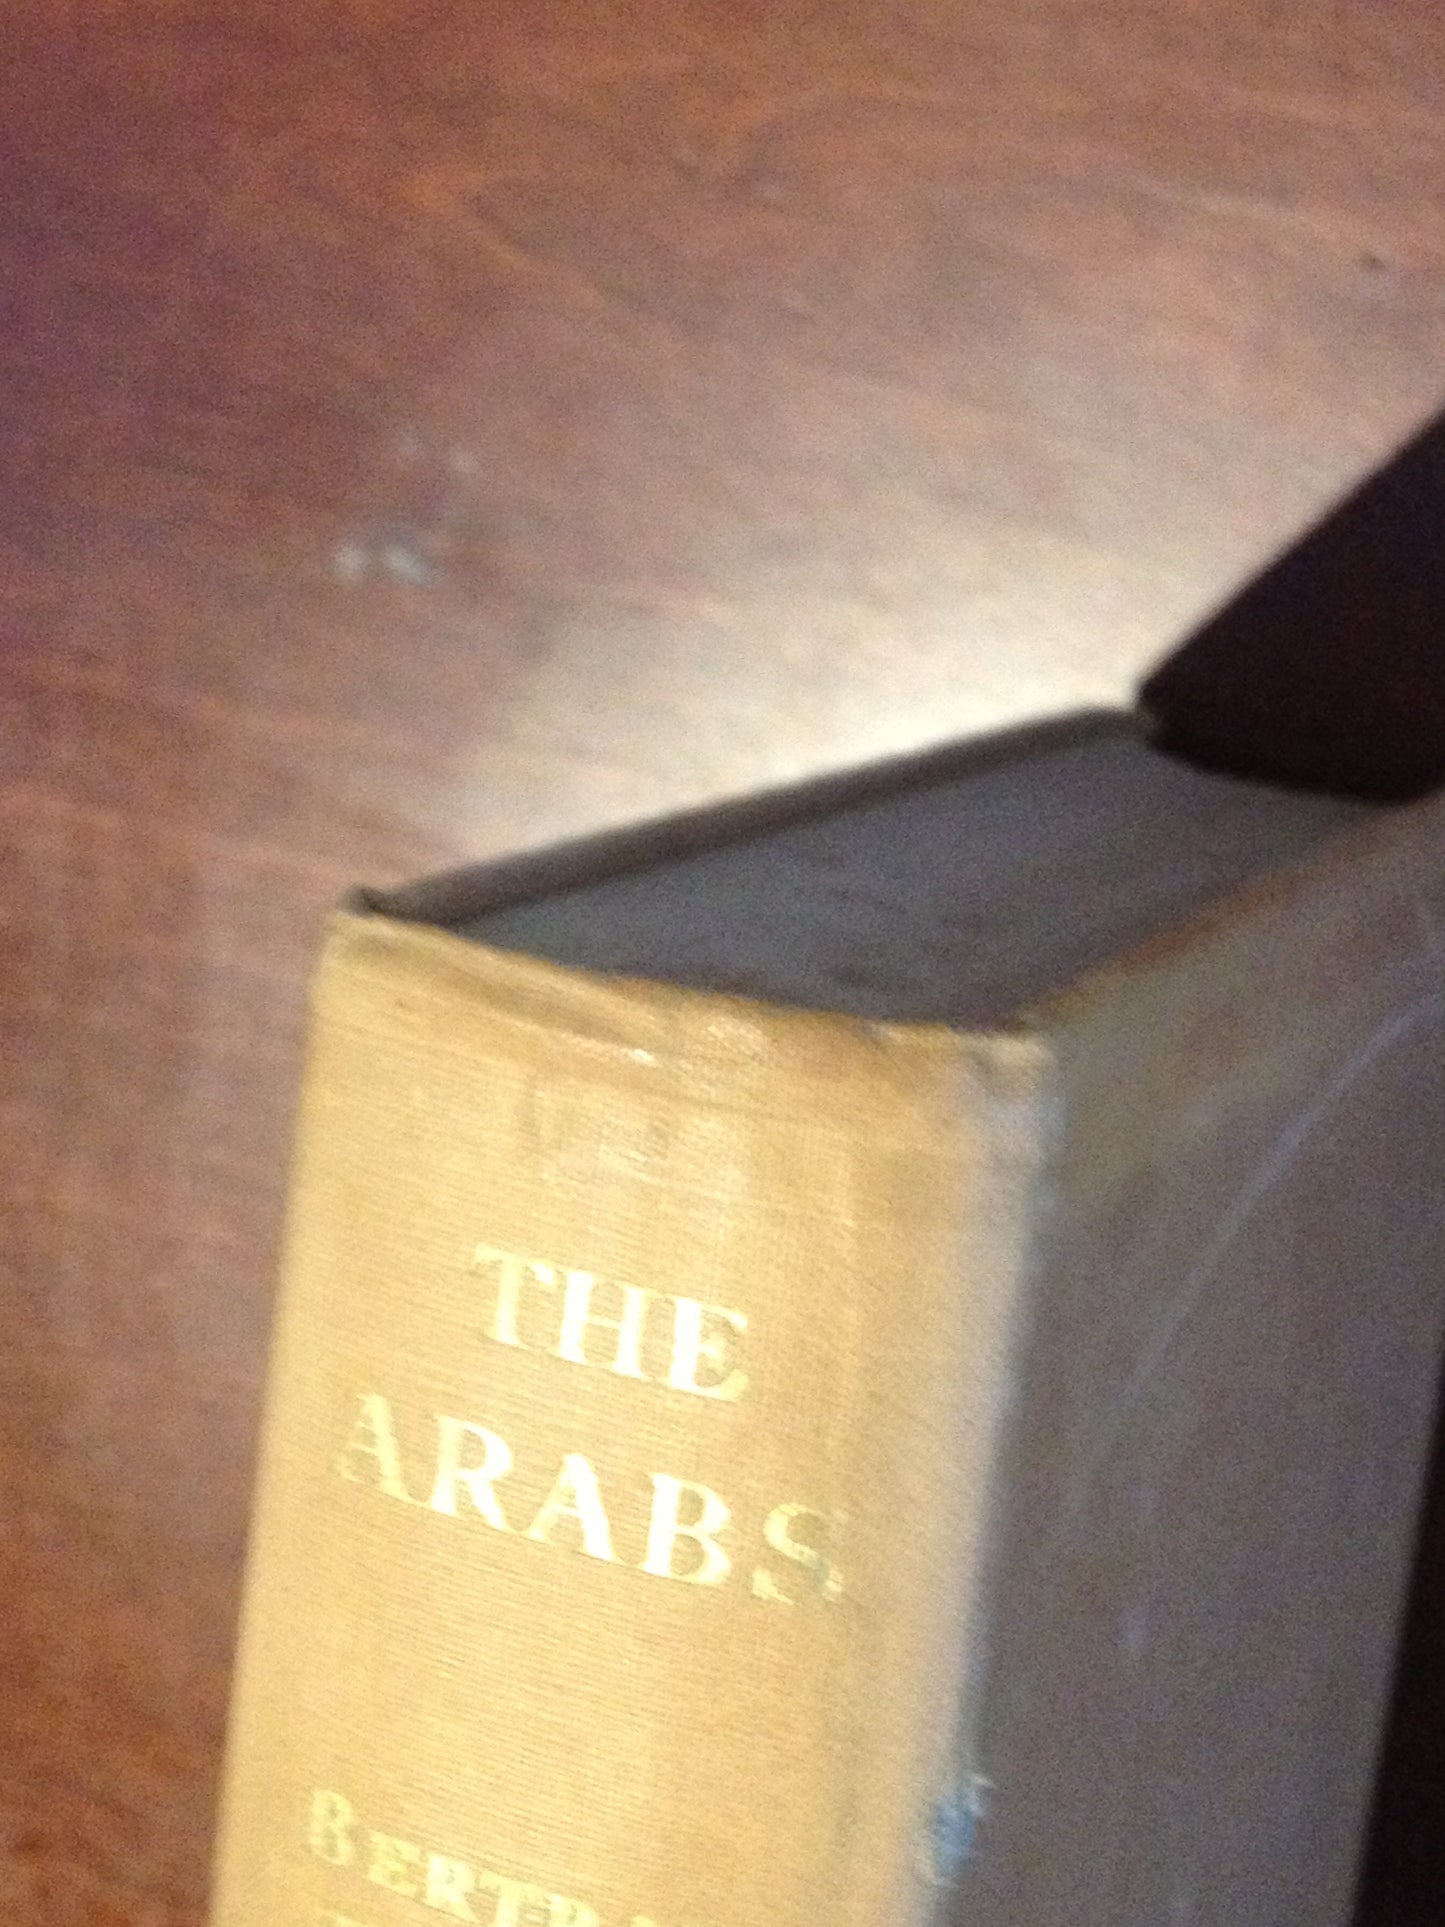 THE ARABS  BY:  BERTRAM THOMAS BooksCardsNBikes